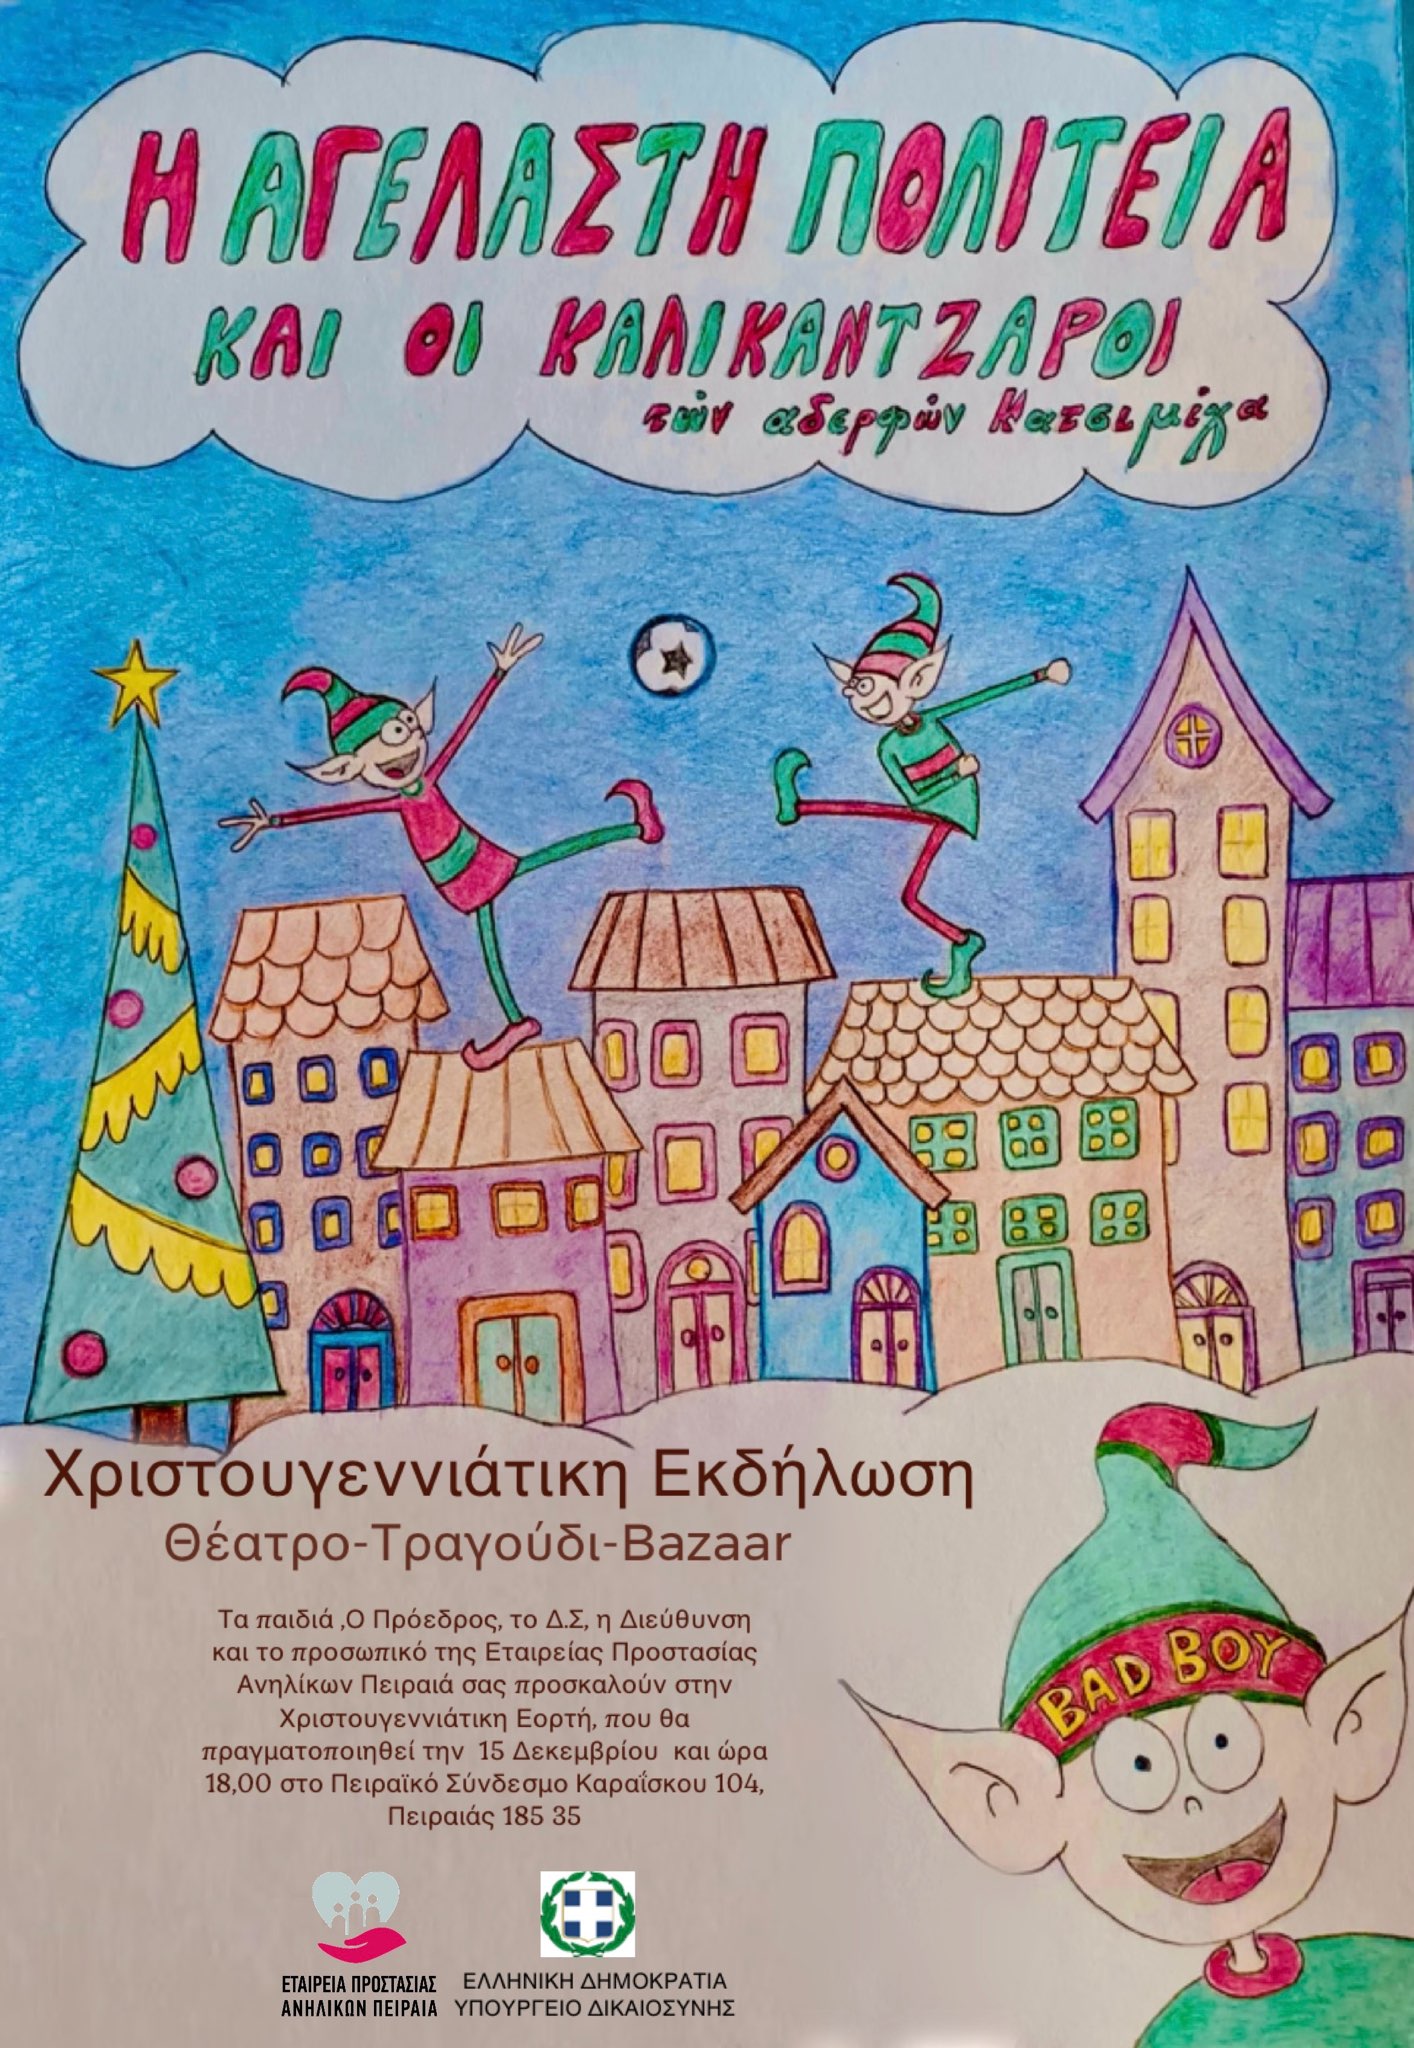 You are currently viewing Χριστουγεννιάτικη Εκδήλωση  Θέατρο – Τραγούδι – Bazaar